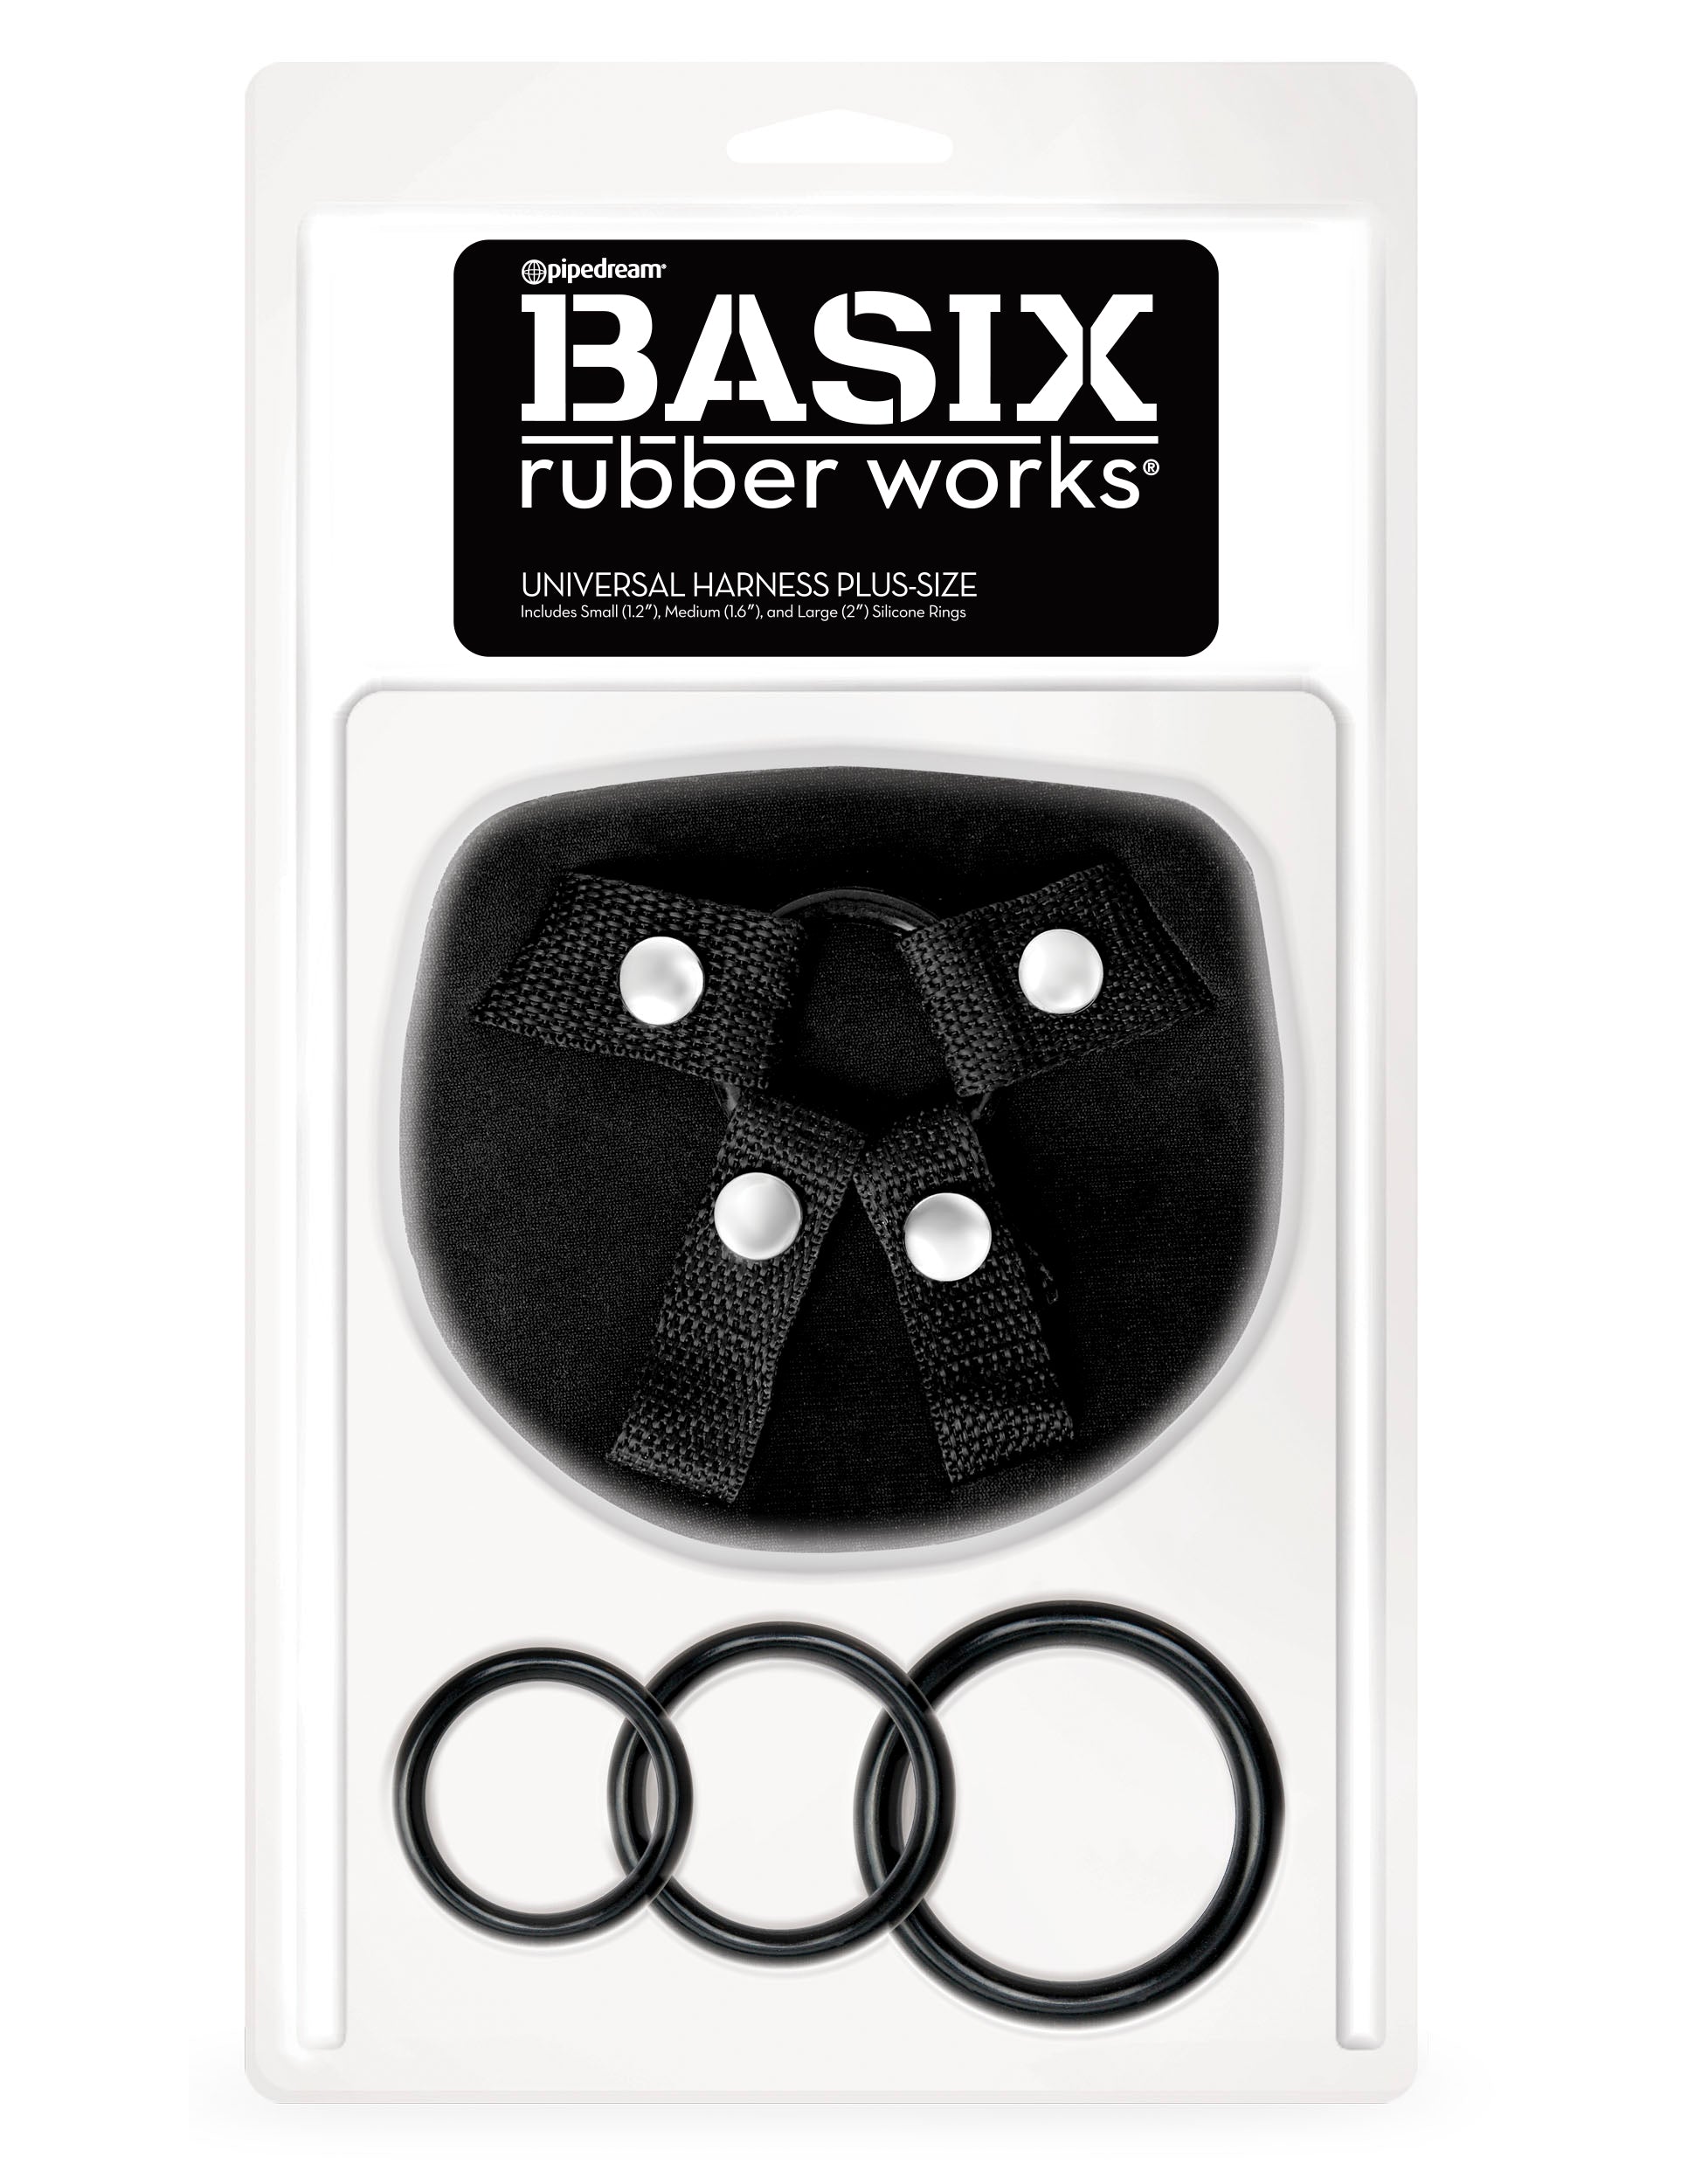 Basix Rubber Works Universal Harness